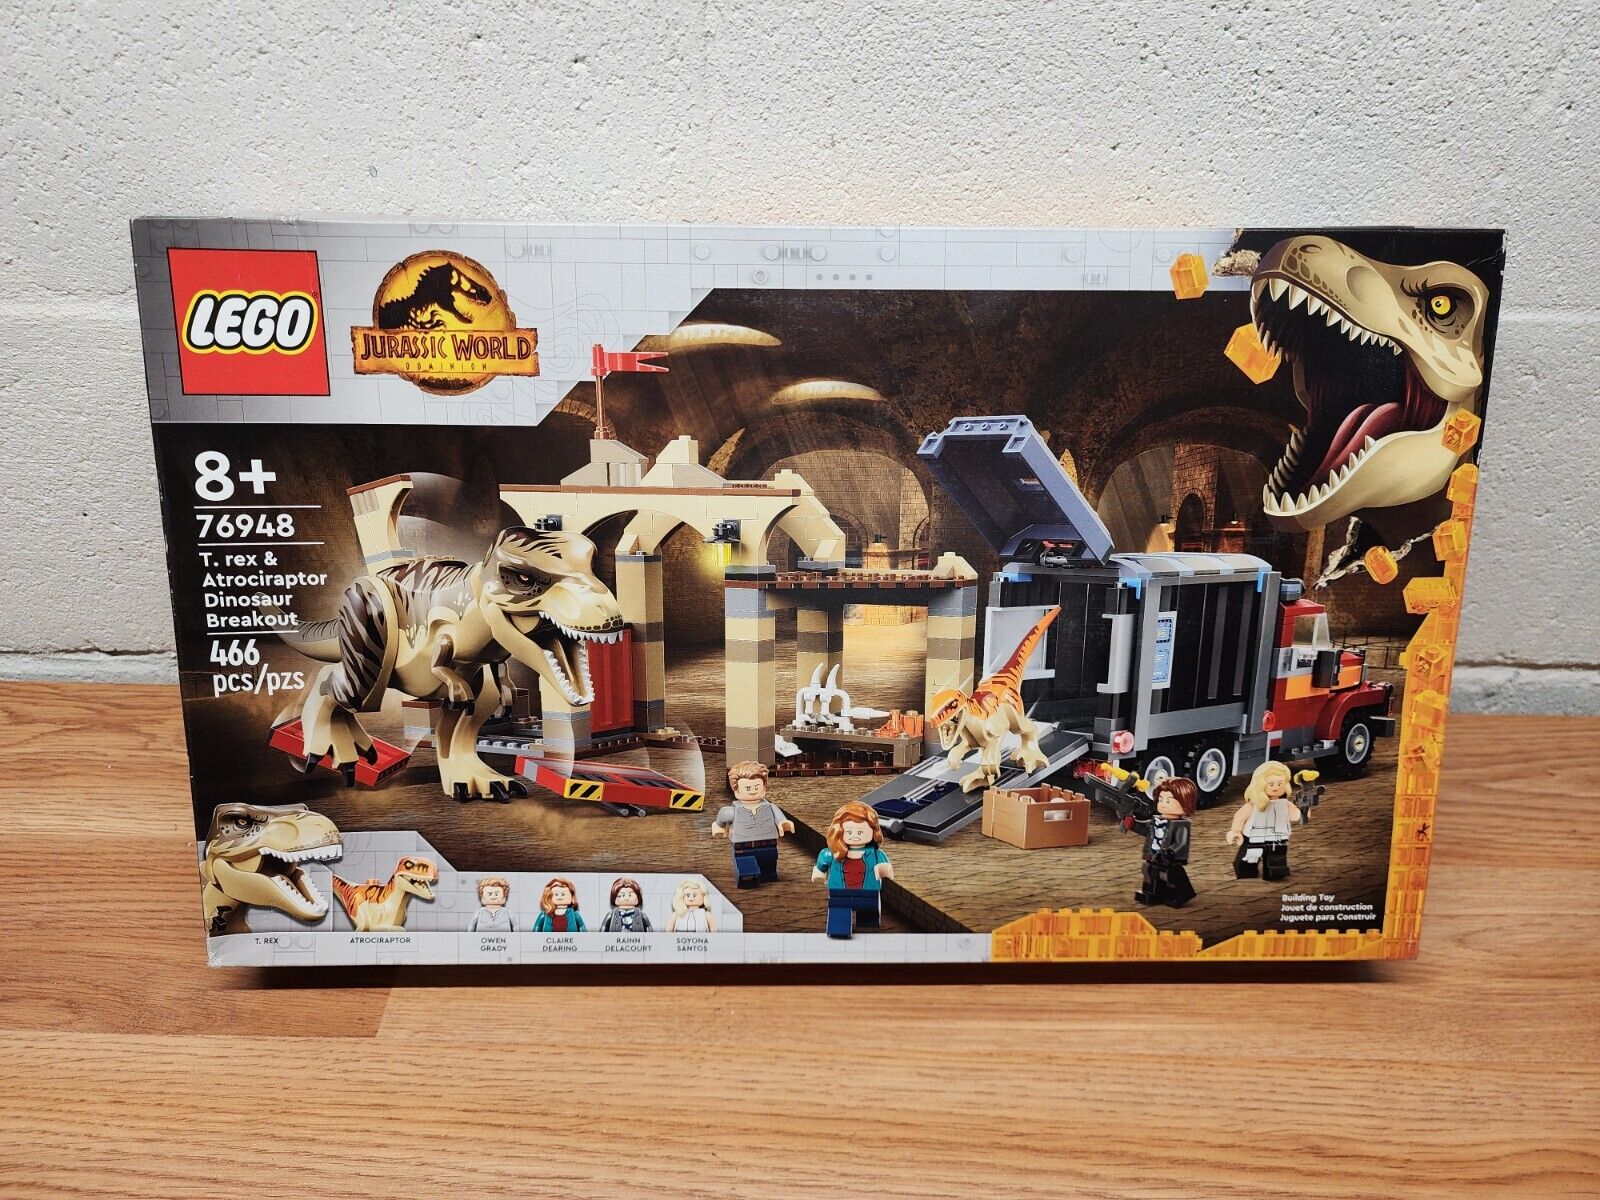 LEGO 76948 Jurassic World T. rex & Atrociraptor Dinosaur Breakout New Box Damage